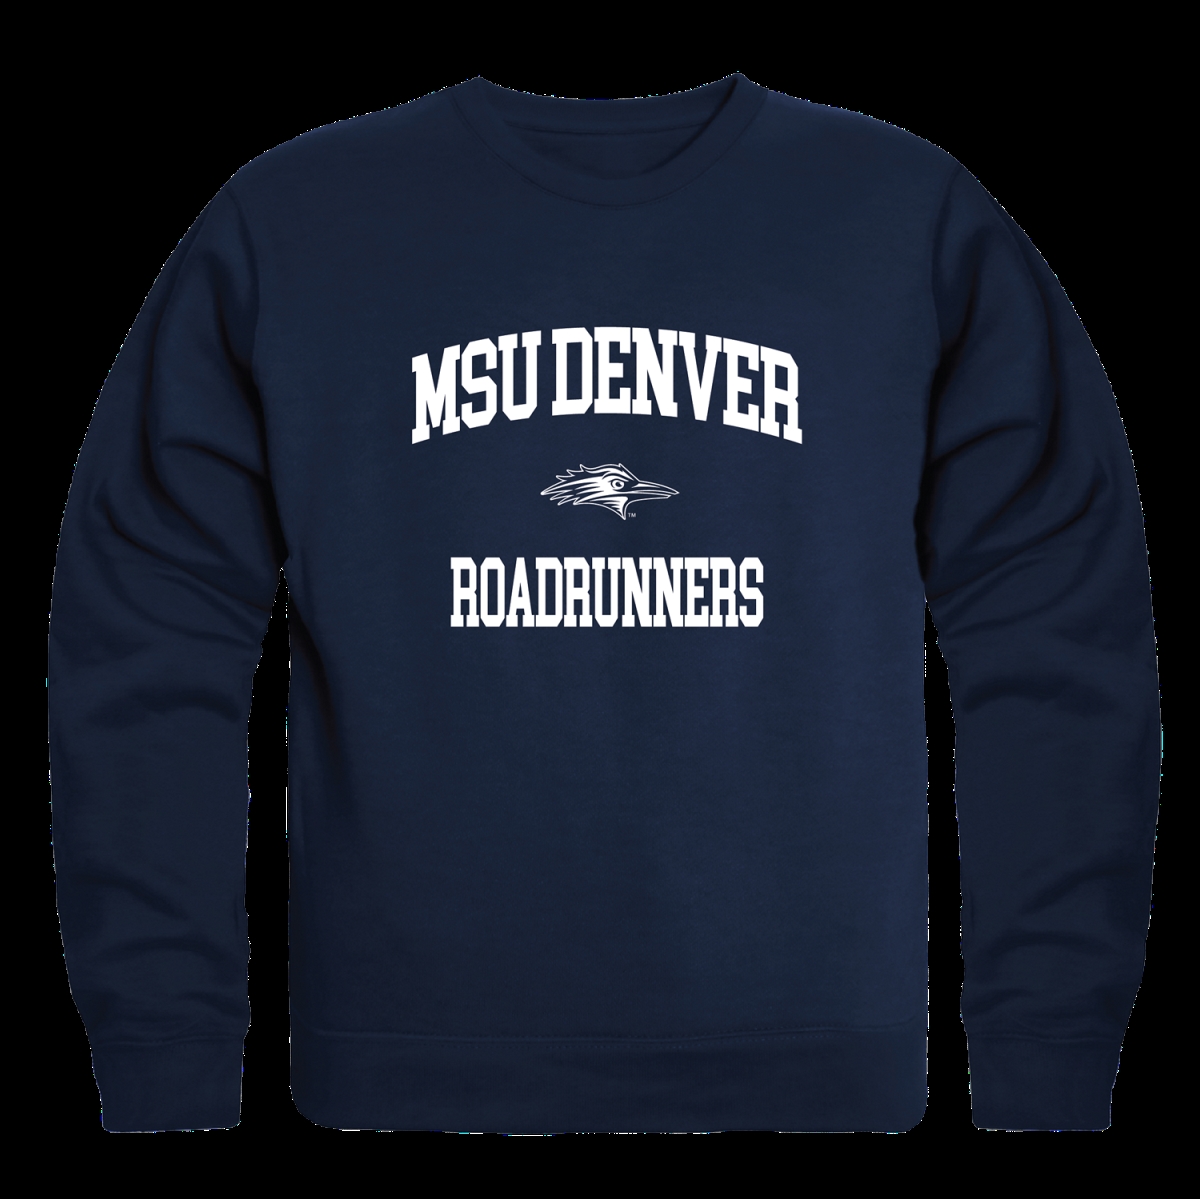 W Republic 568-542-NVY-02 Metropolitan State University Denver Roadrunners Seal Crewneck Sweatshirt&#44; Navy - Medium